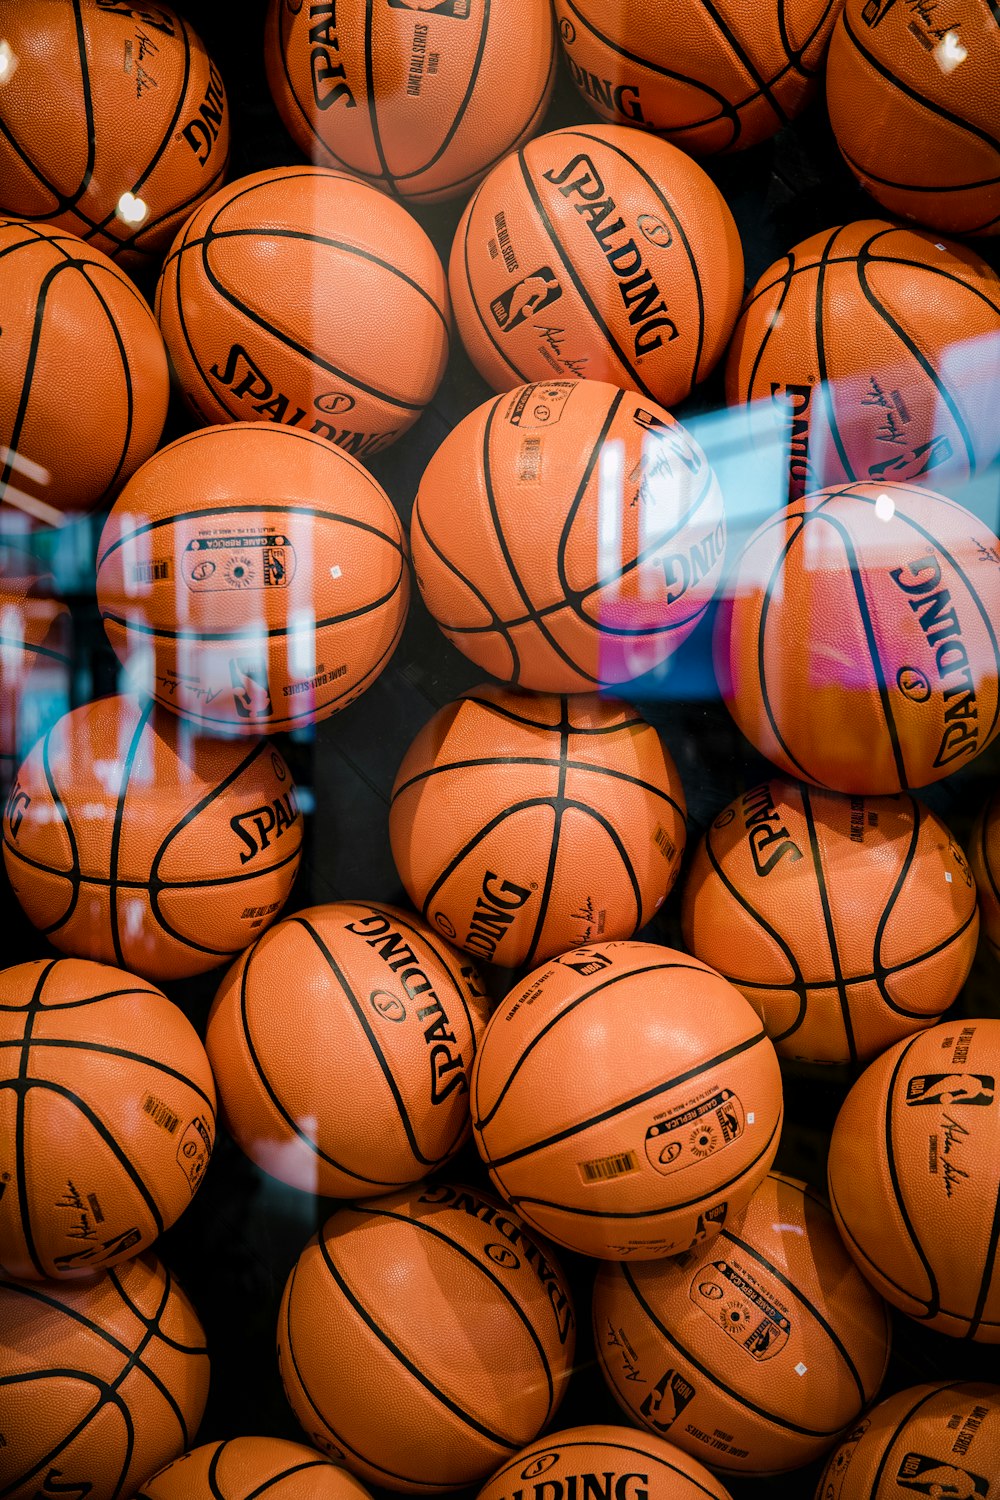 Basketball Wallpapers: Free HD Download [500+ HQ] | Unsplash